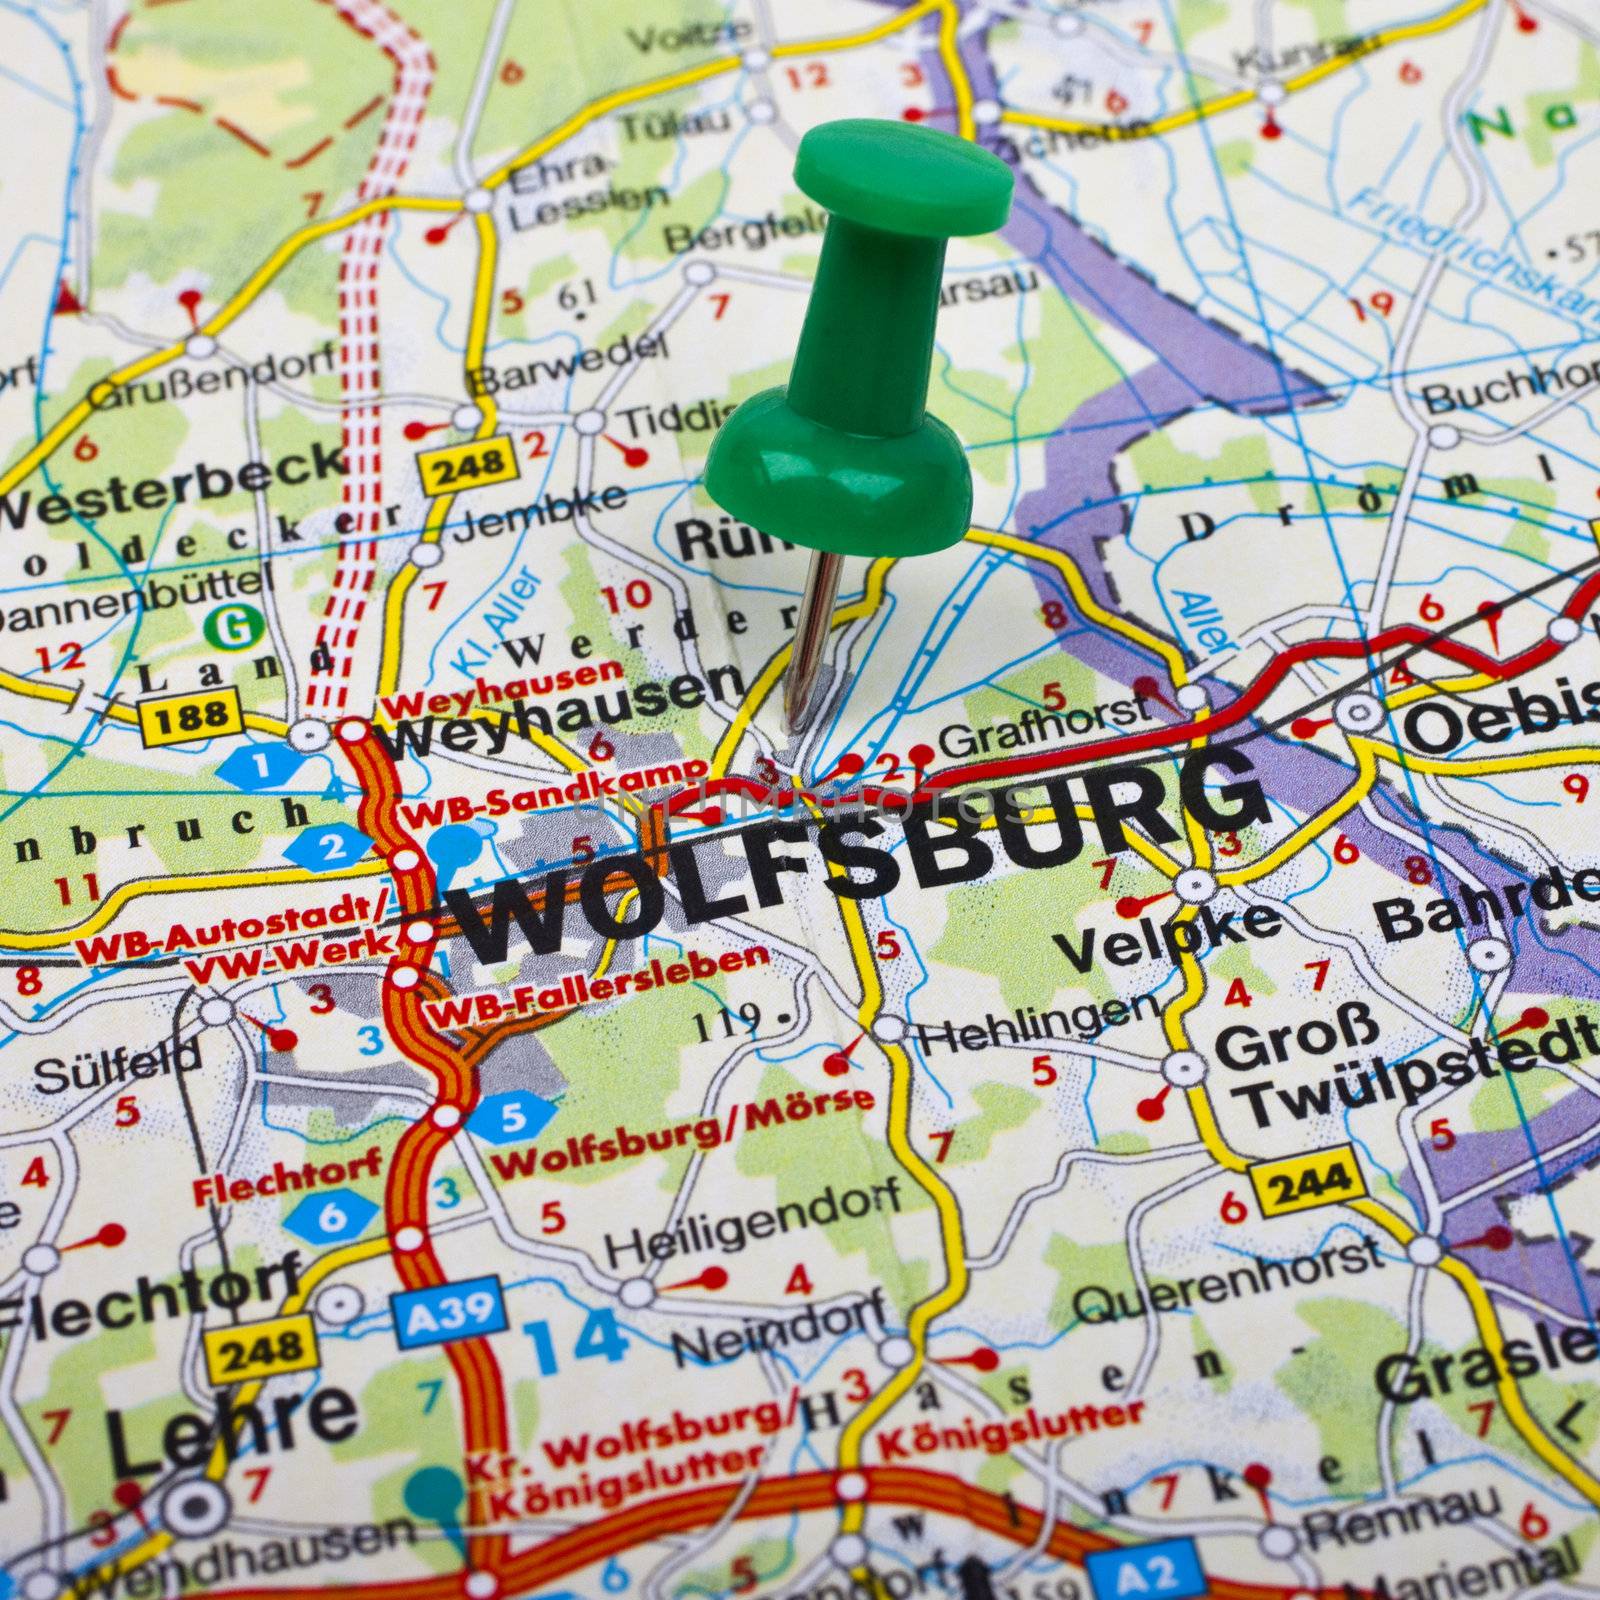 Wolfsburg Map by chrisdorney